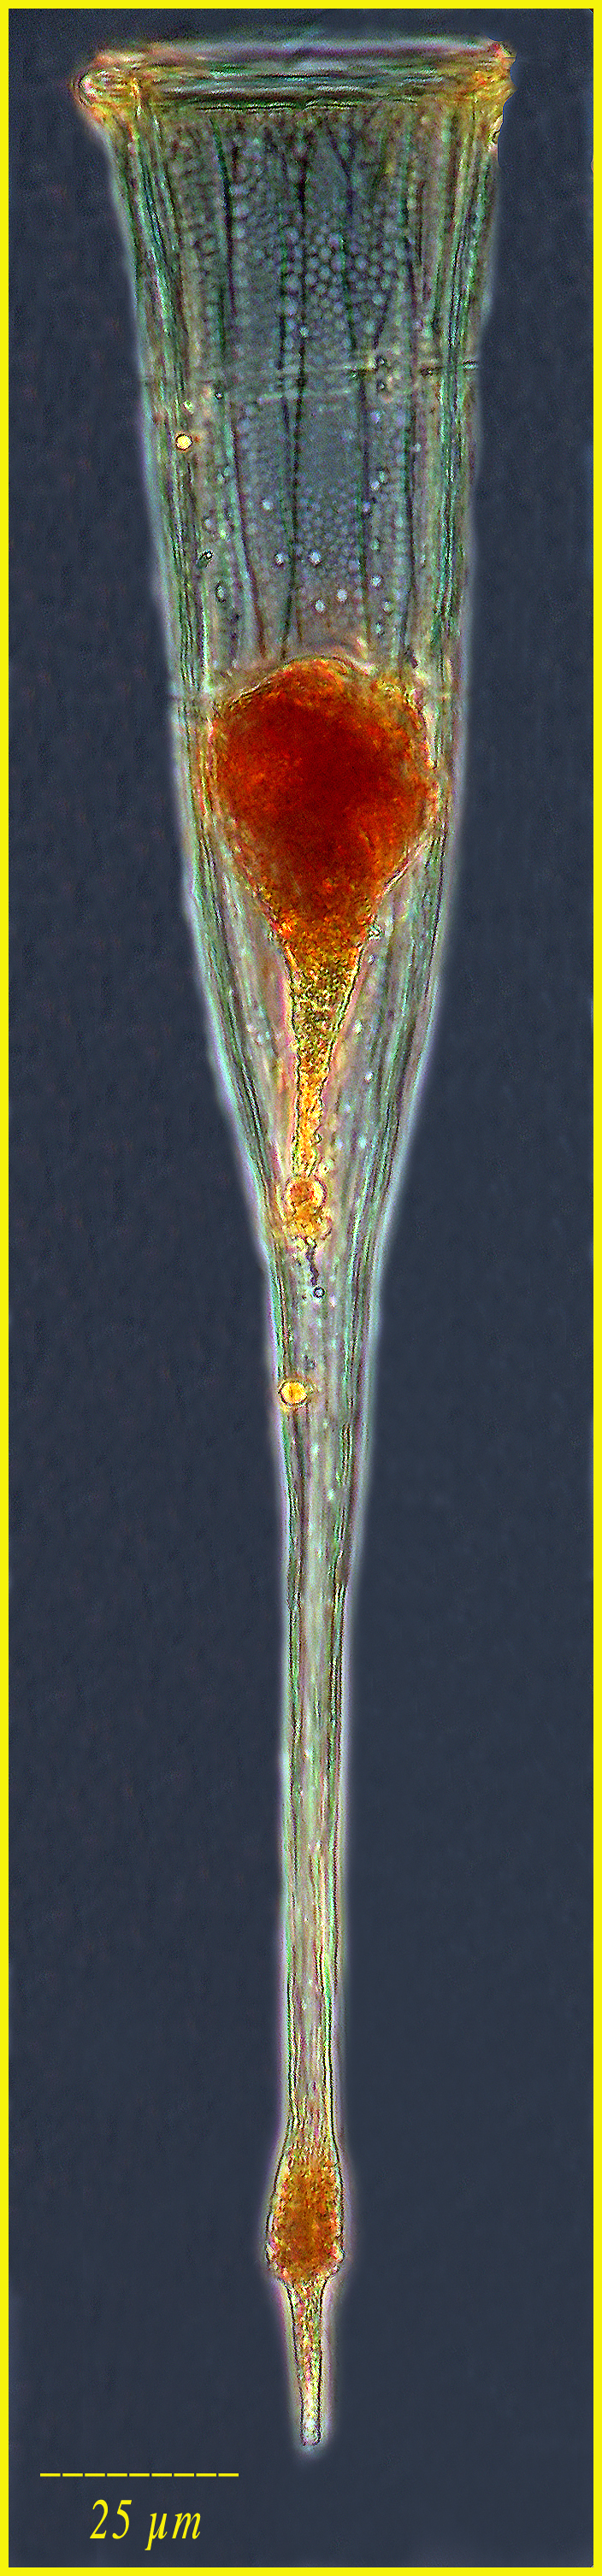 Rhabdonellopsis apophysata